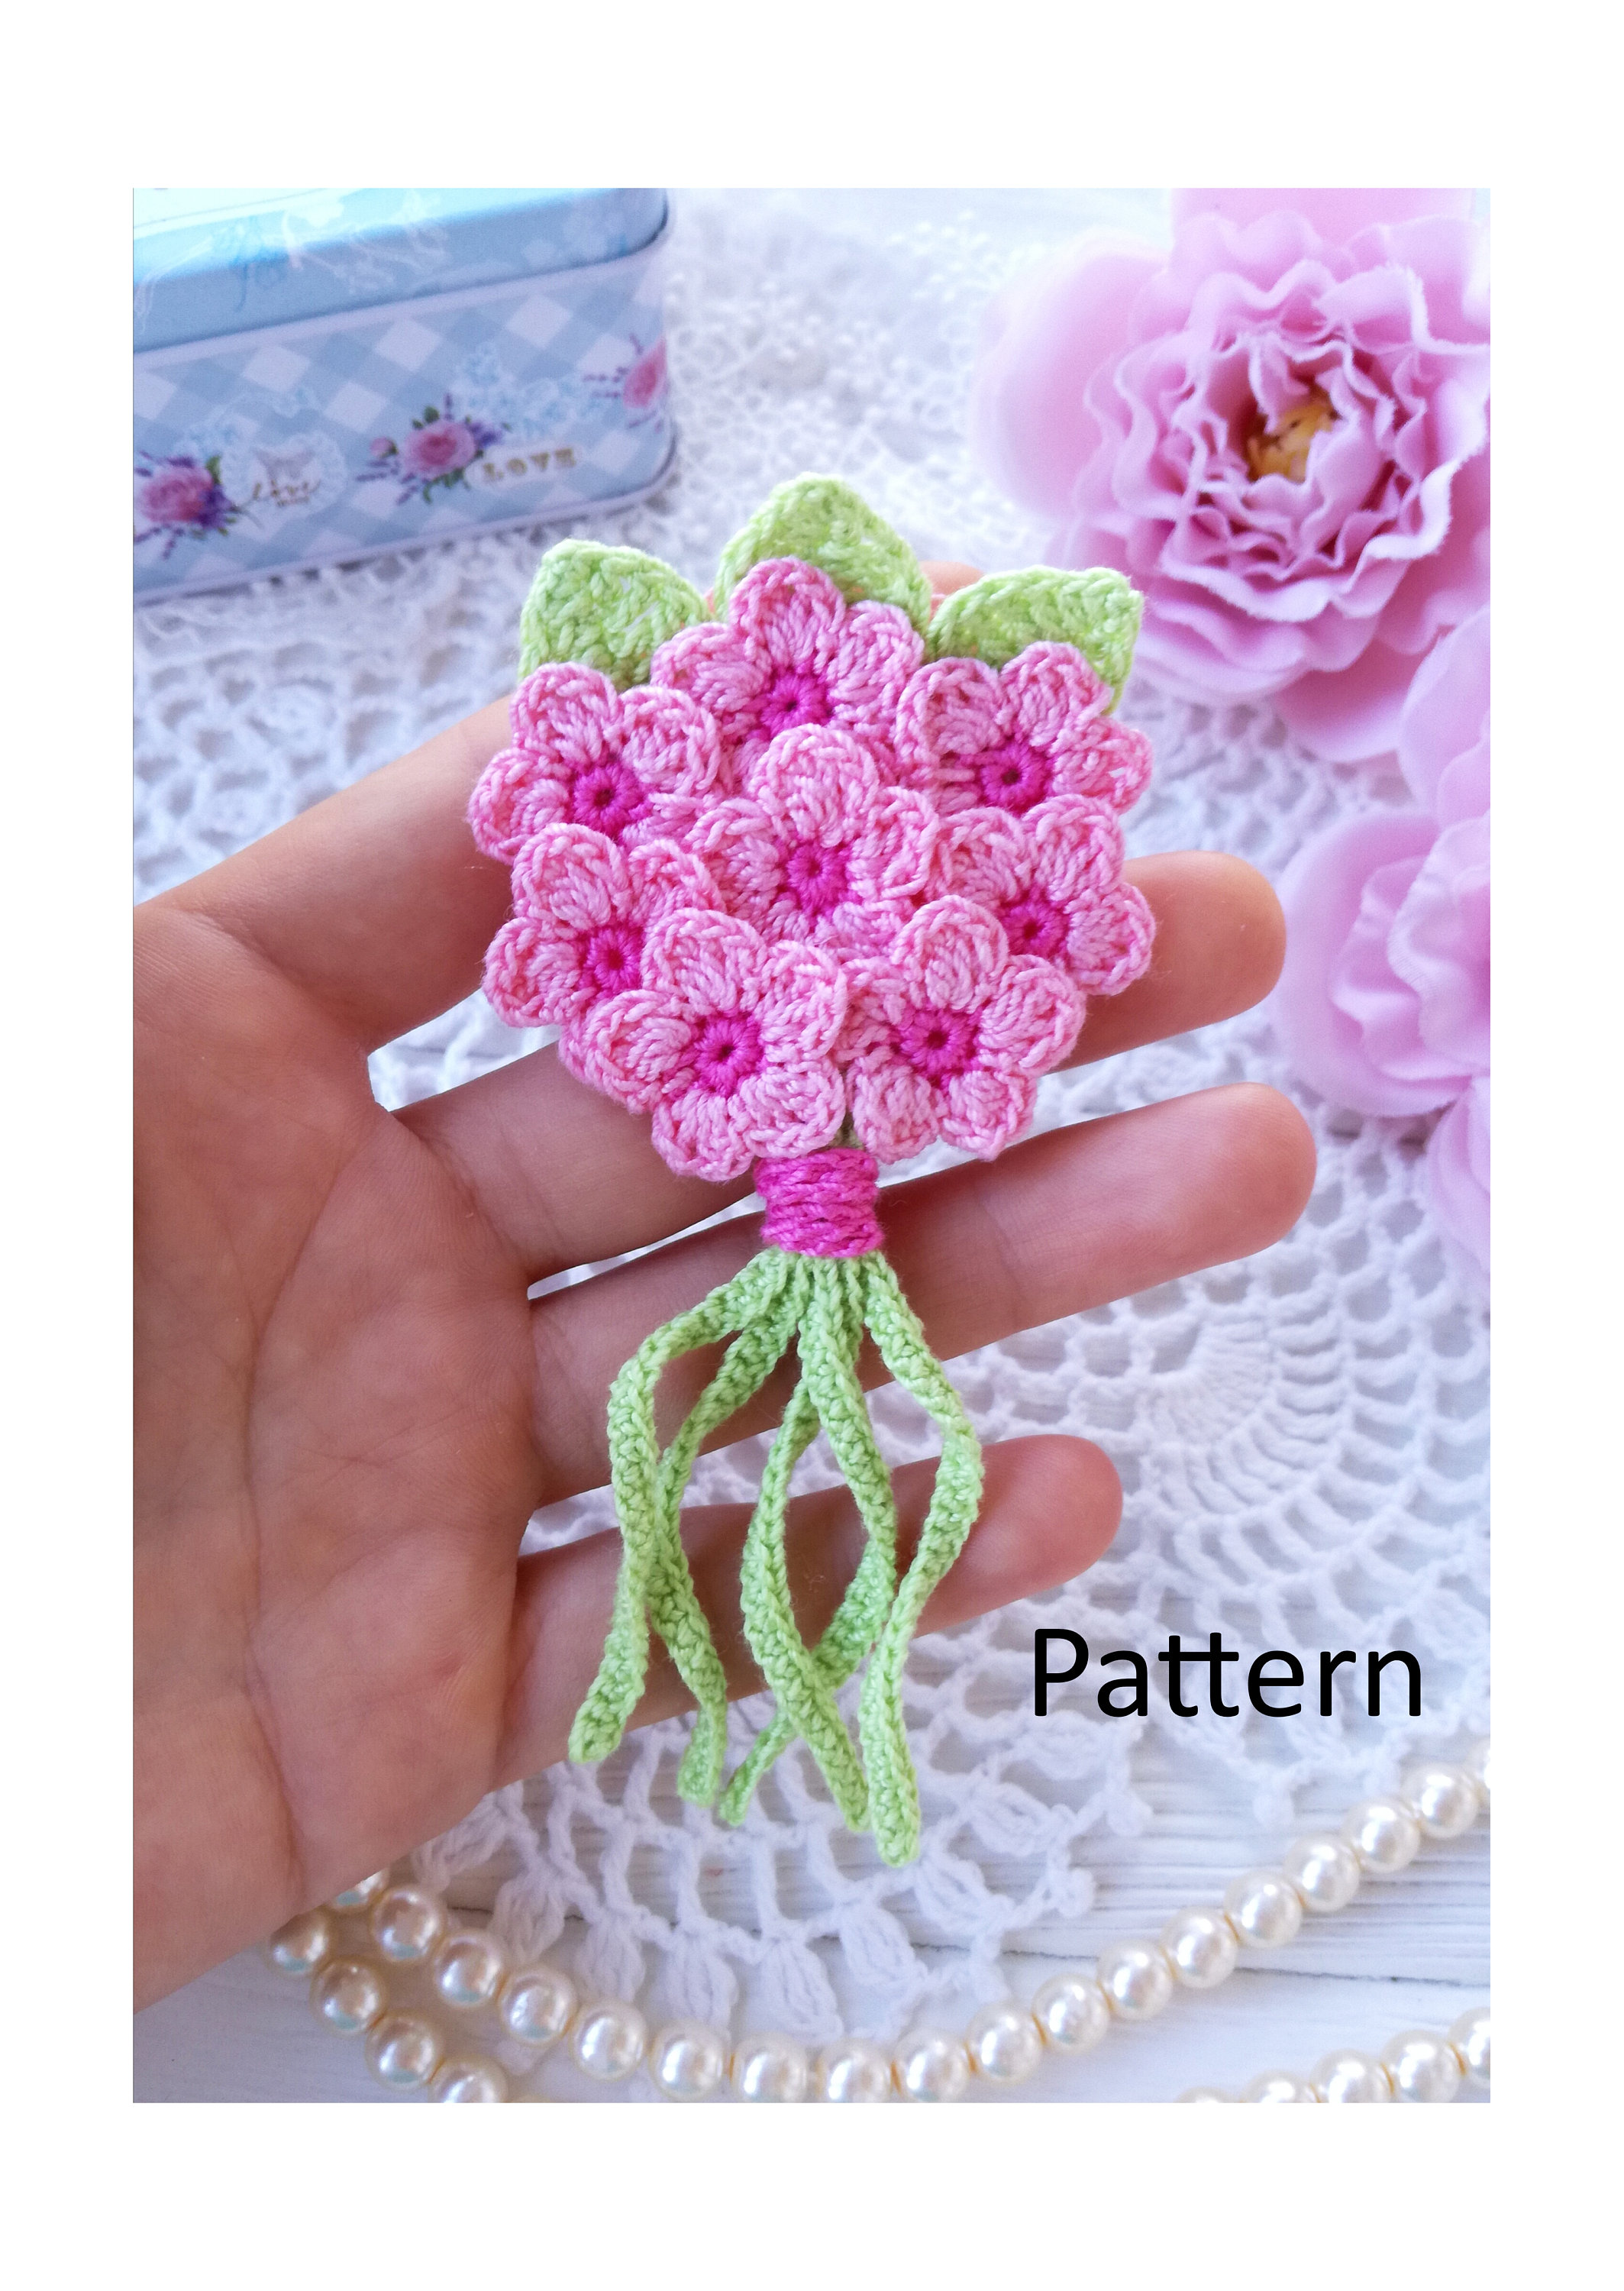 Embellishment 4 x Handmade Crochet Roses.  Applique Brooch.  Glass Beads.